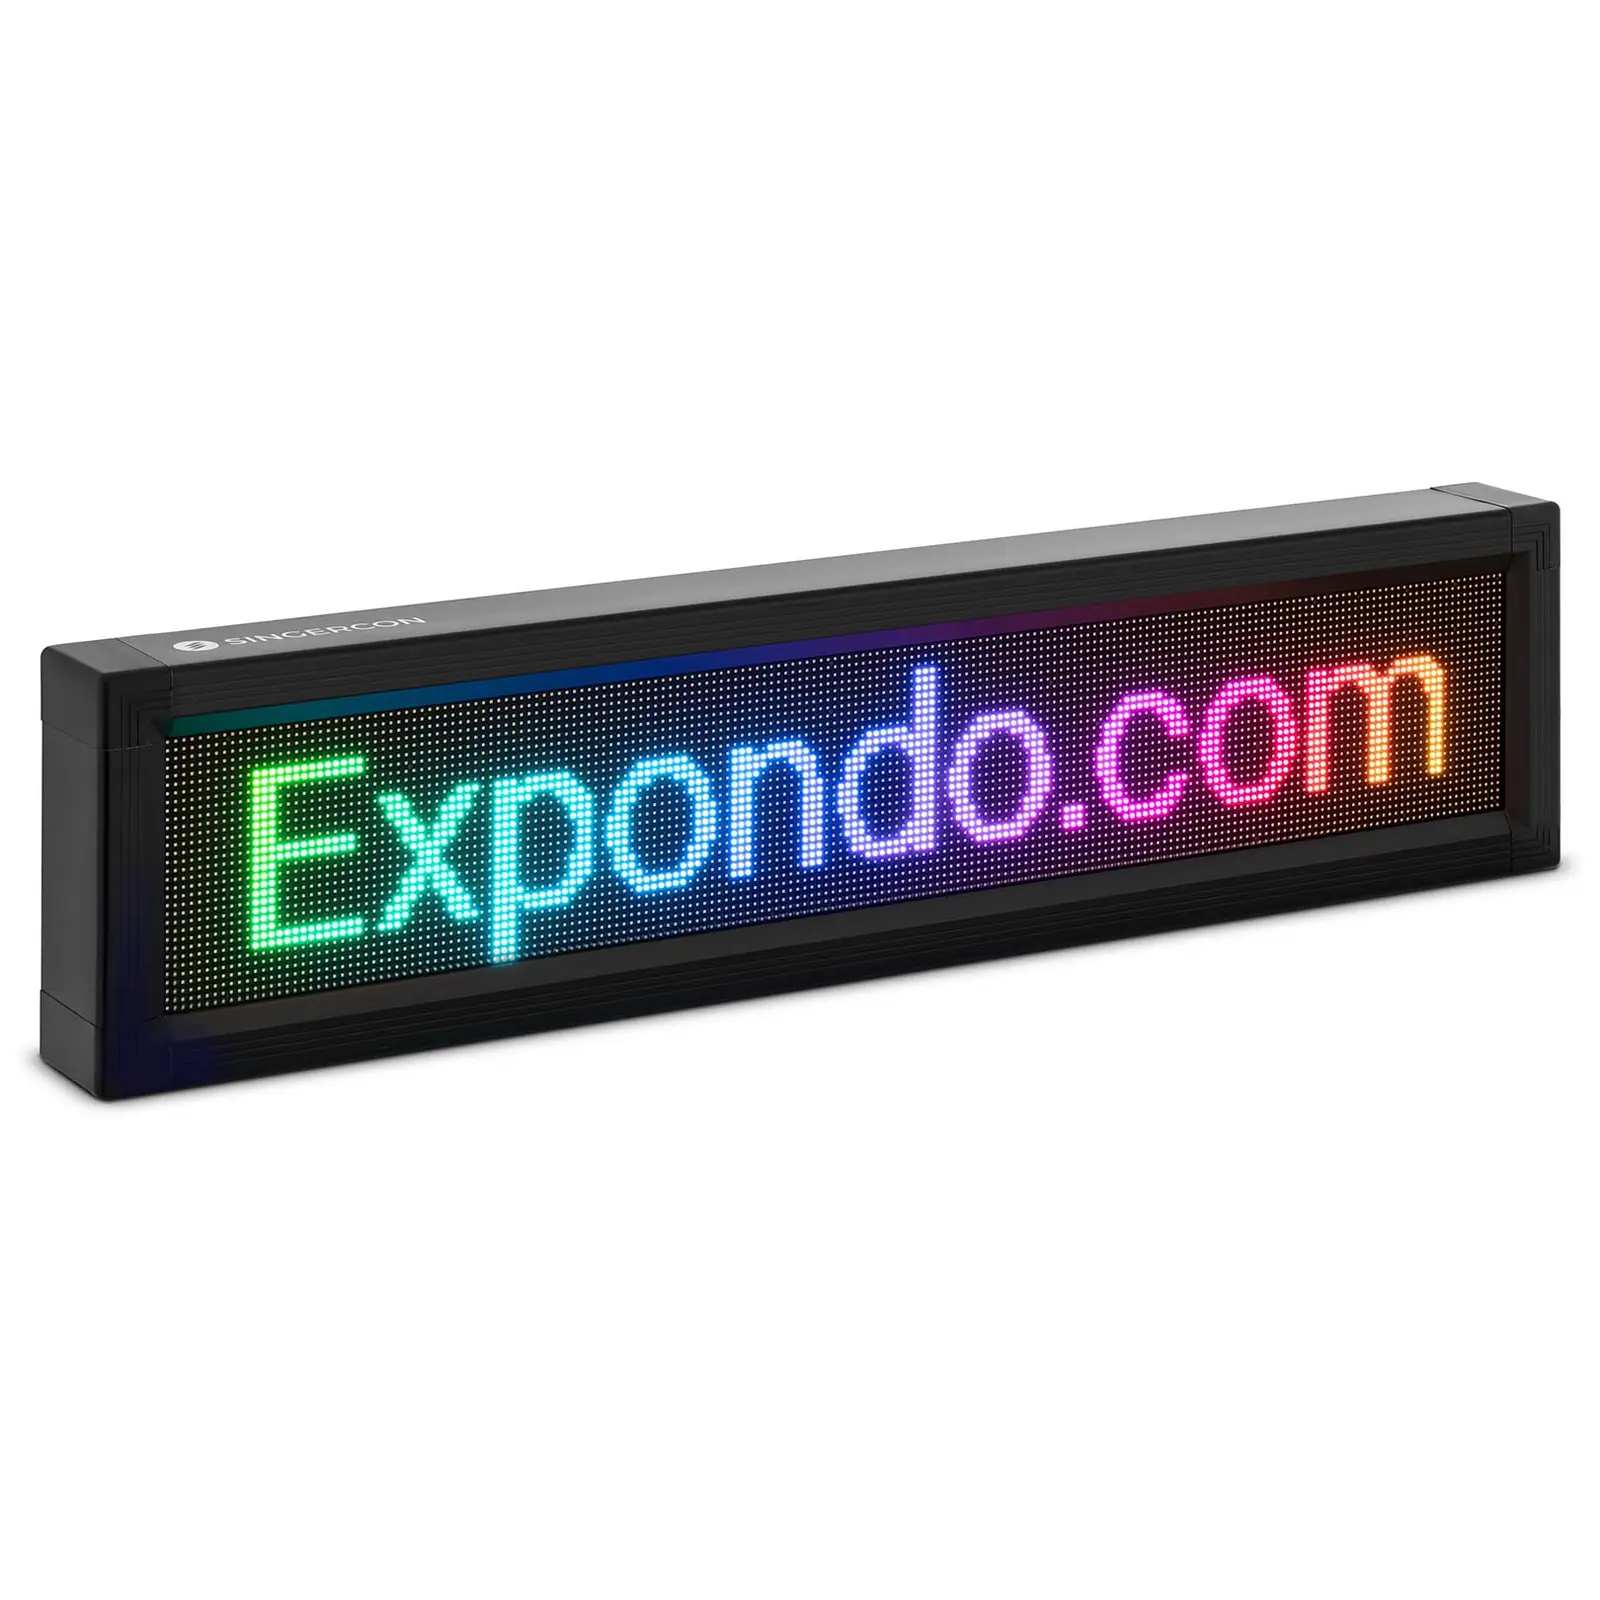 Scritta LED - 192 x 32 LED colorati - 96 x 15 cm - Programmabile tramite iOS / Android